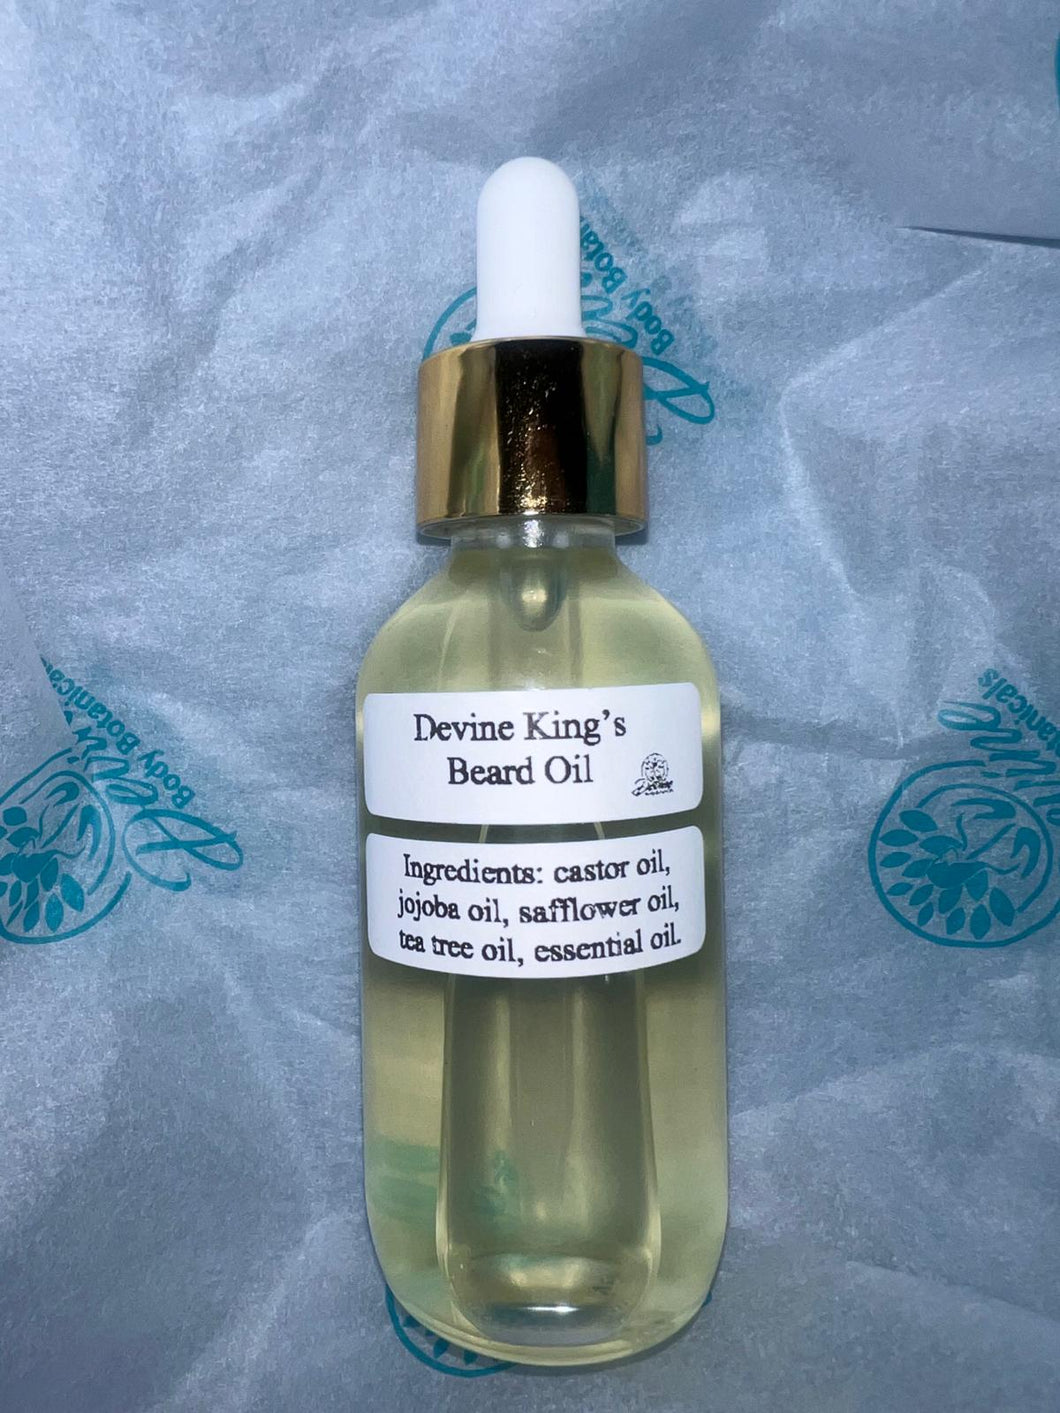 Devine King's Beard Oil